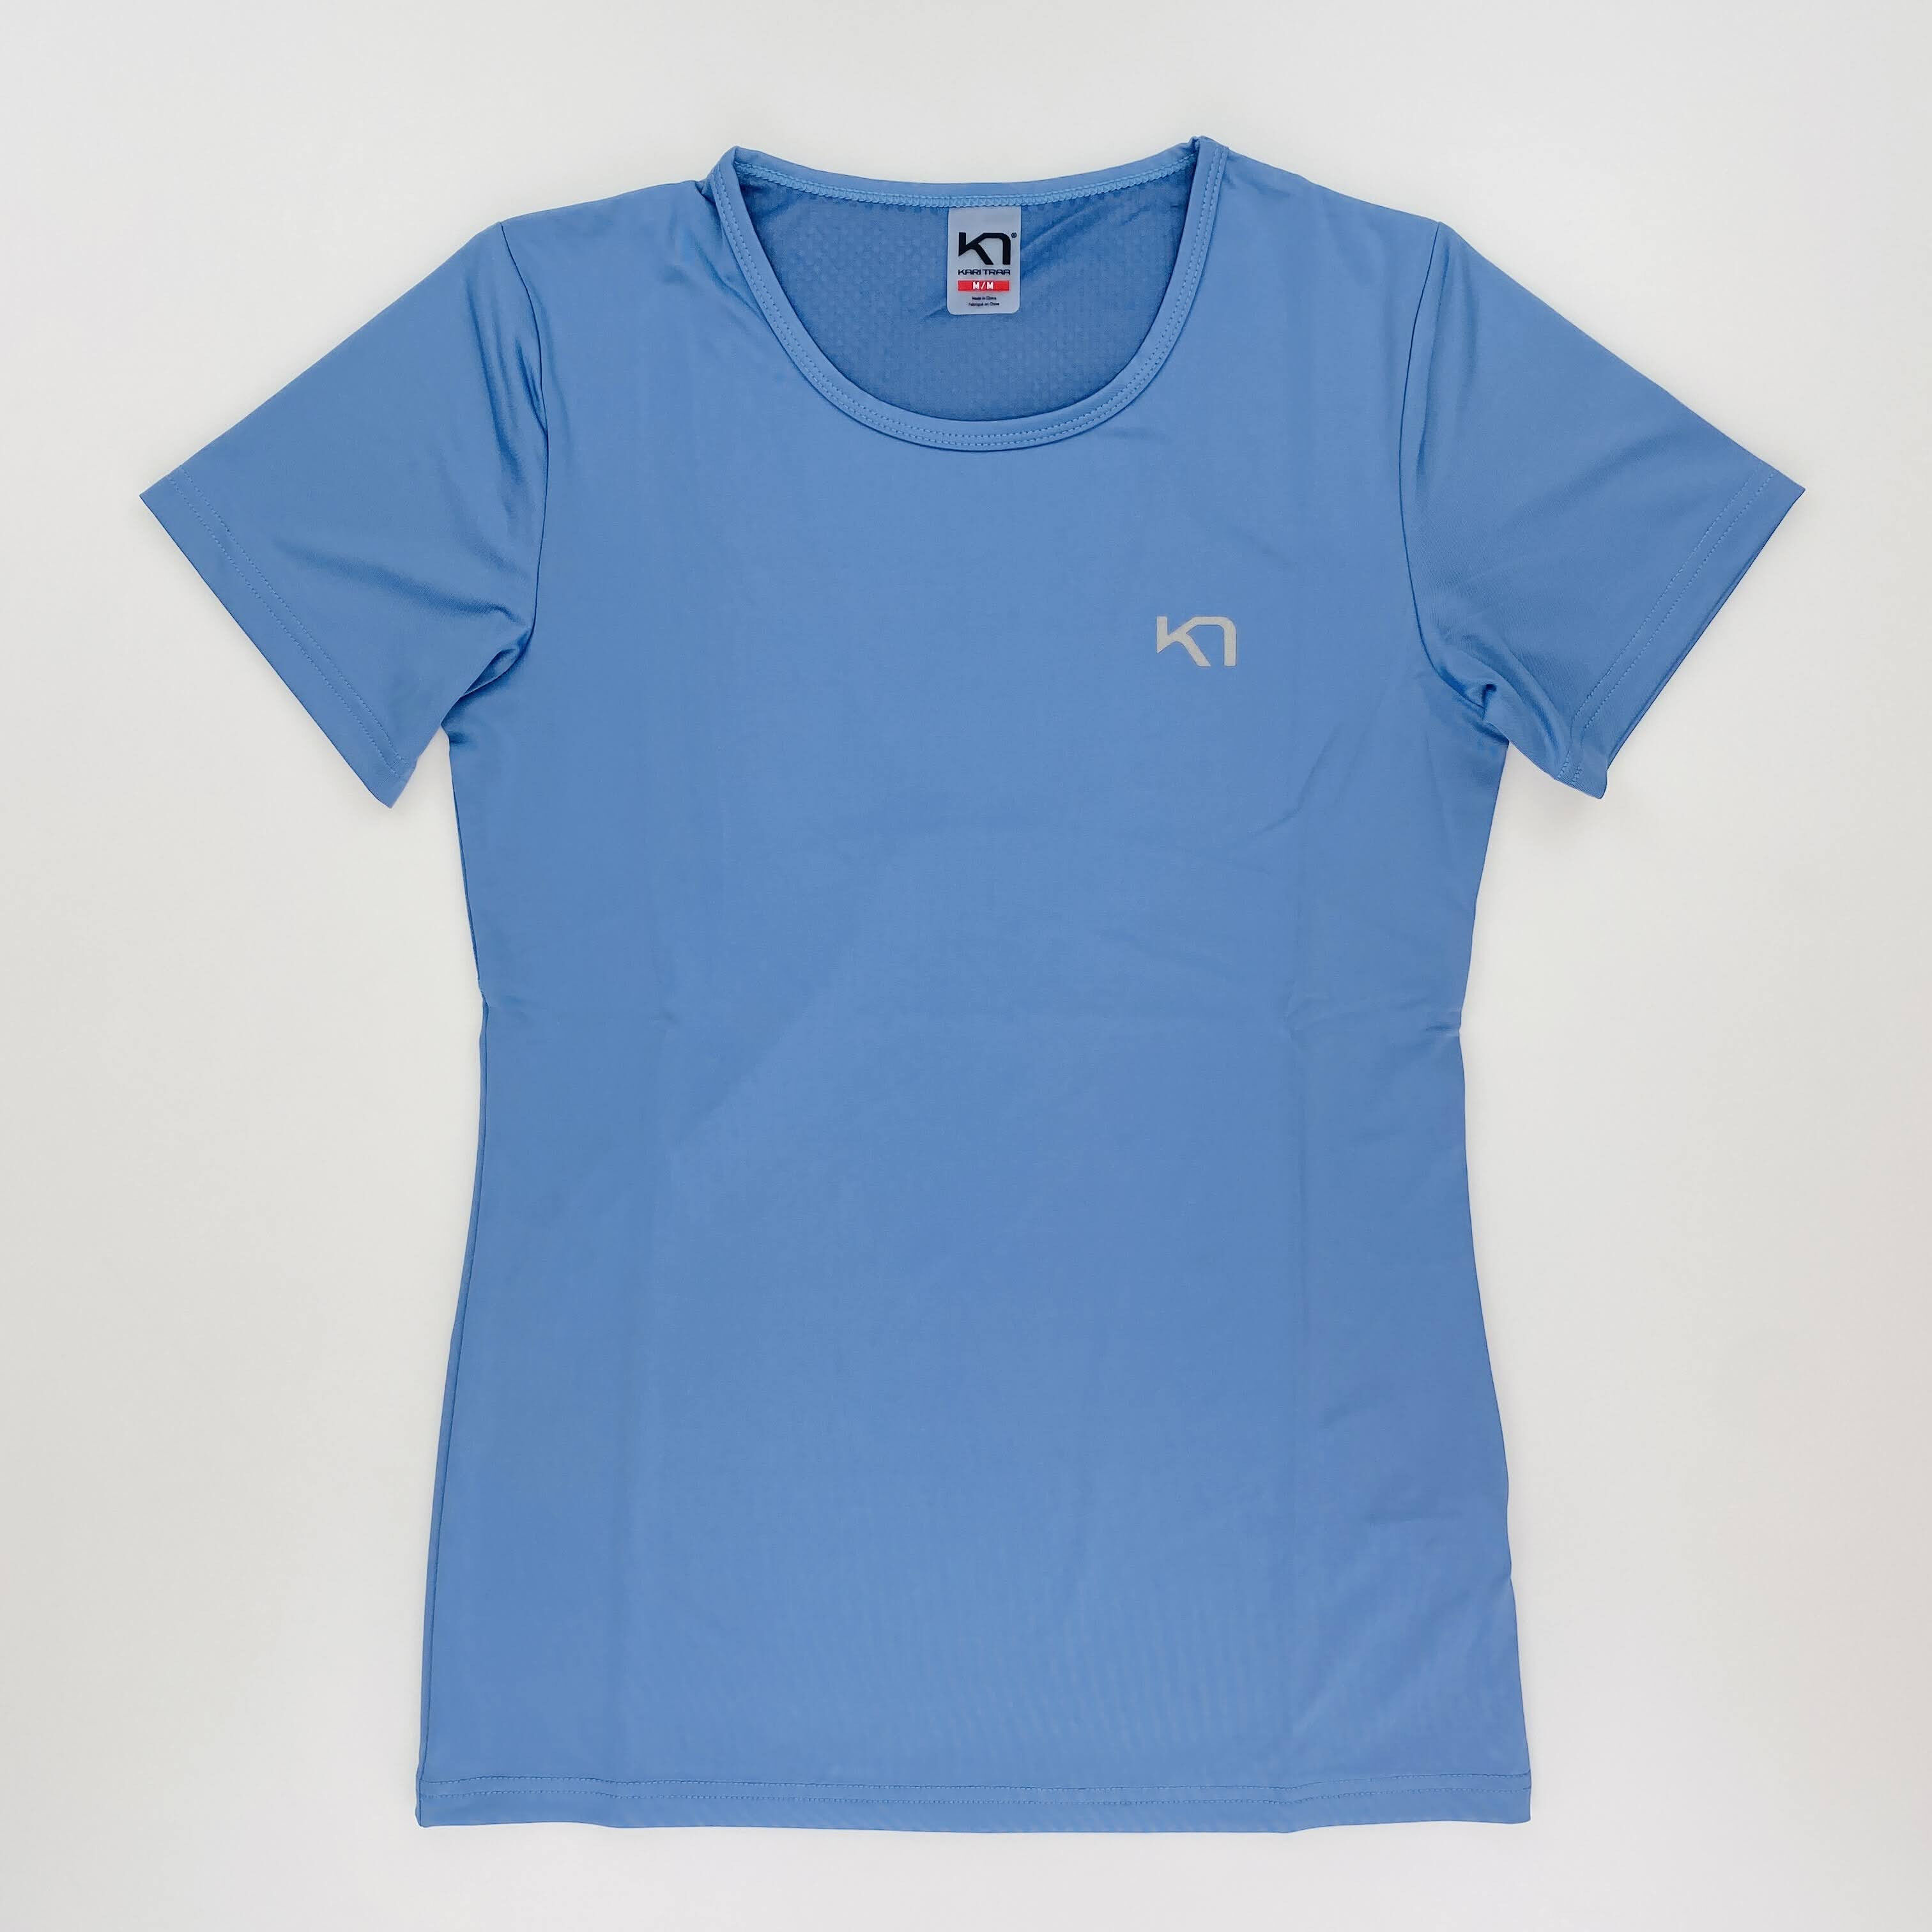 Kari Traa Mari Tee - Second Hand T-shirt - Women's - Blue - M | Hardloop